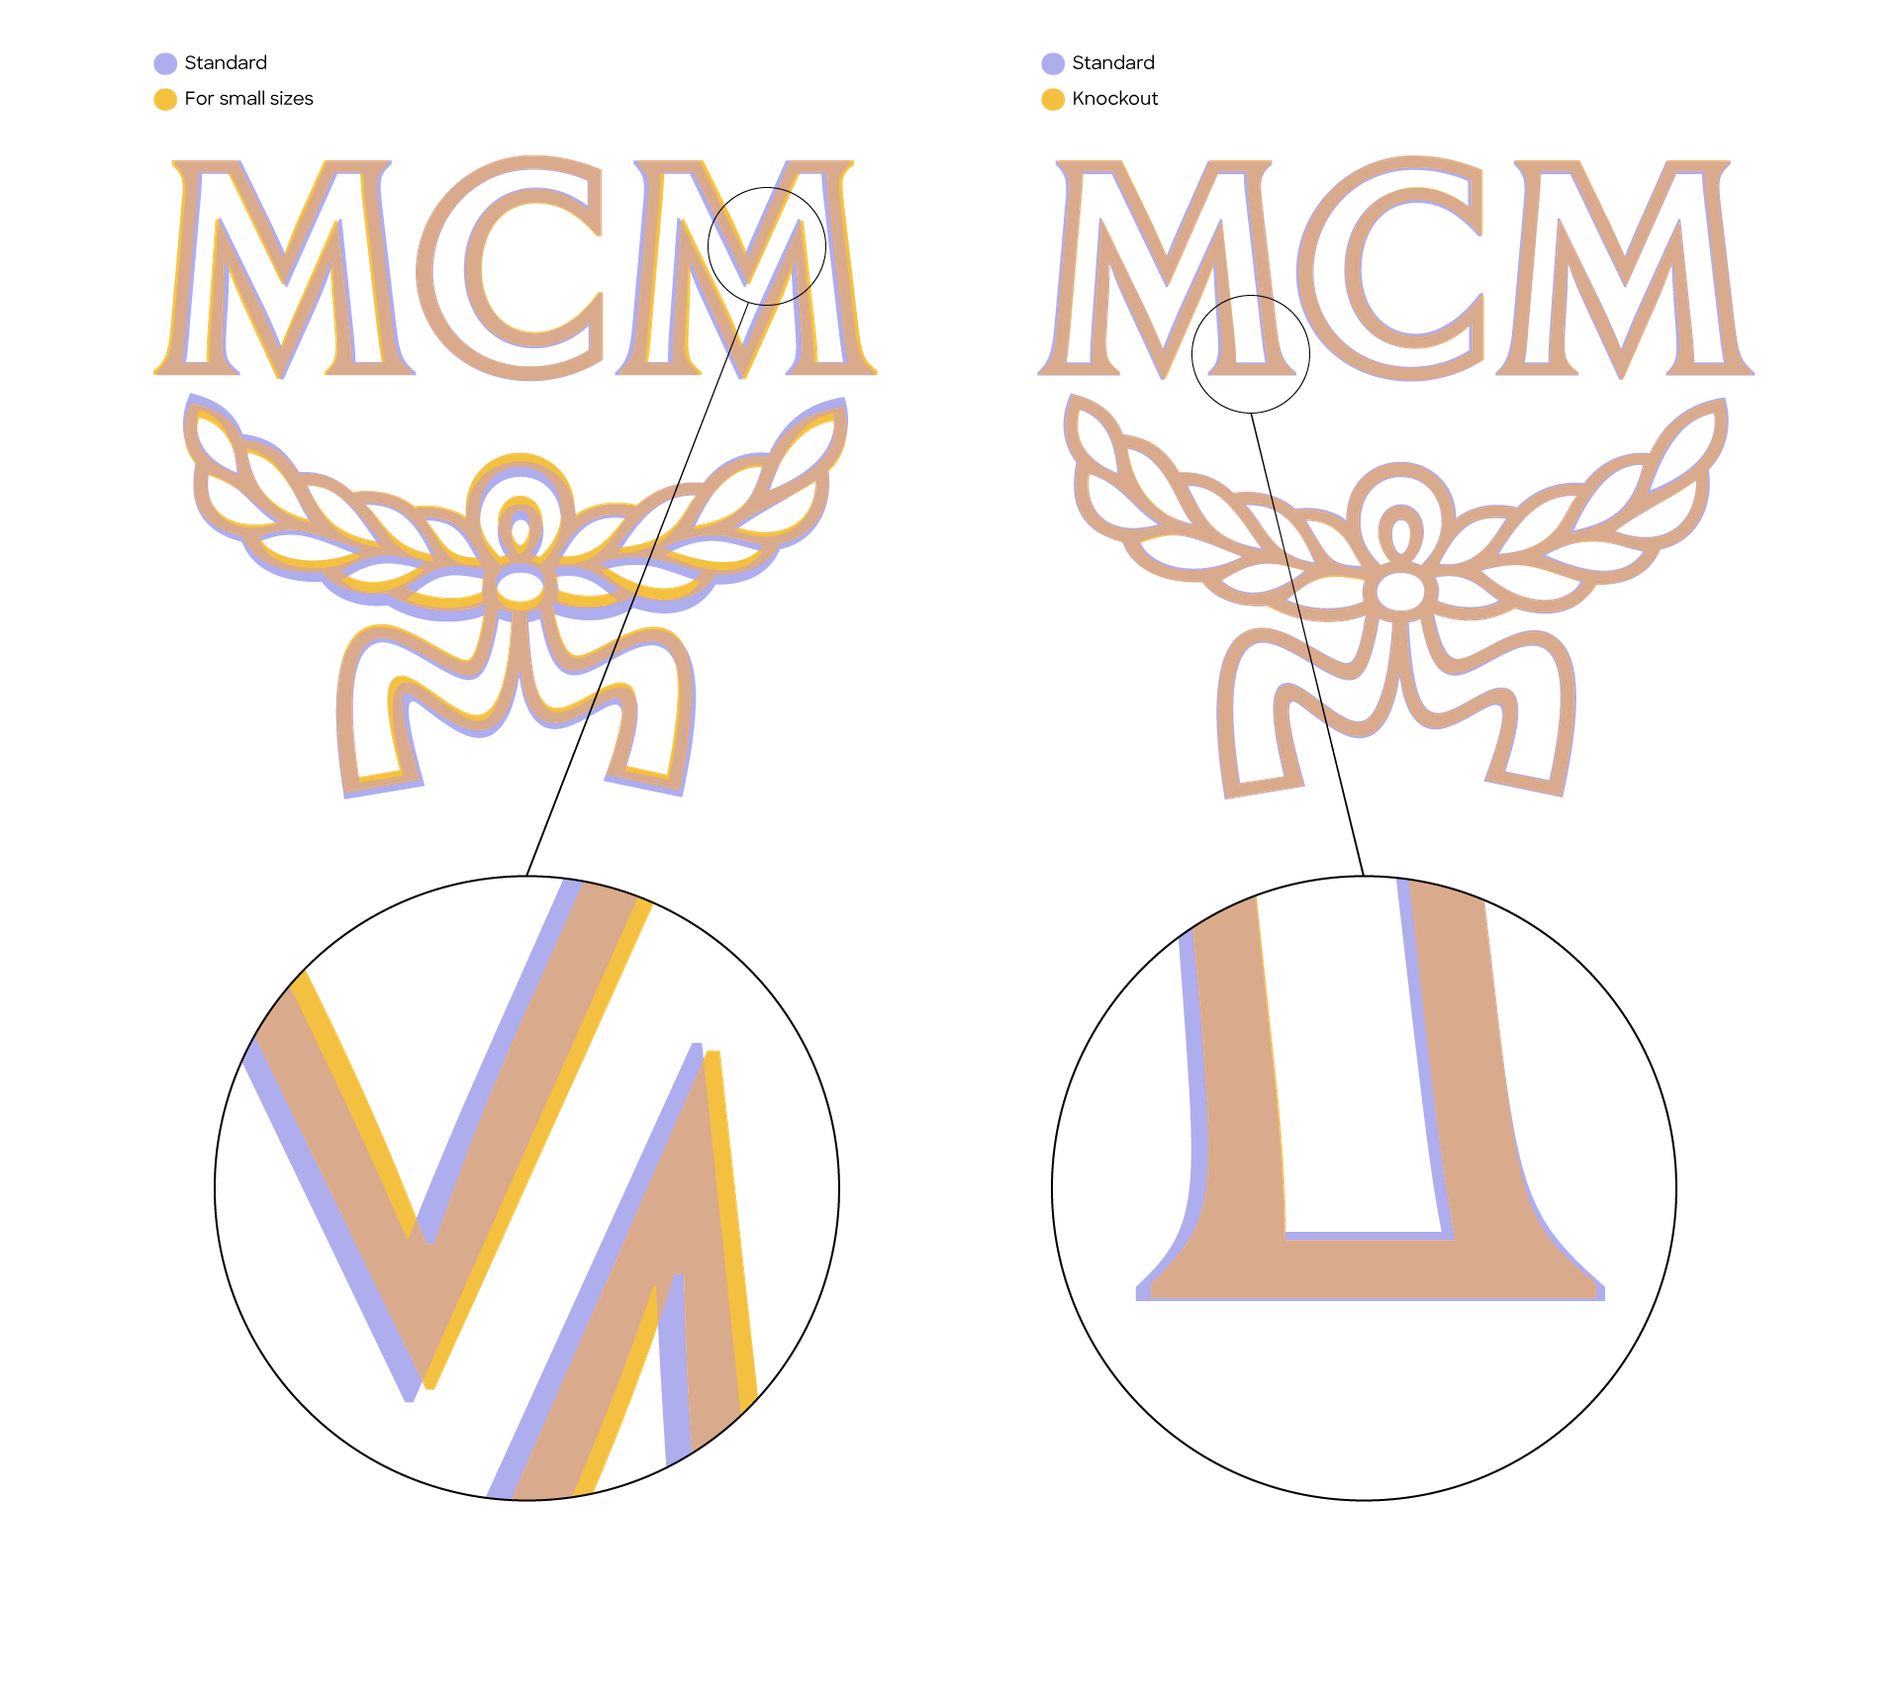 MCM Black Visetos Monogram Belt With Gold-Plated Logo Laurel